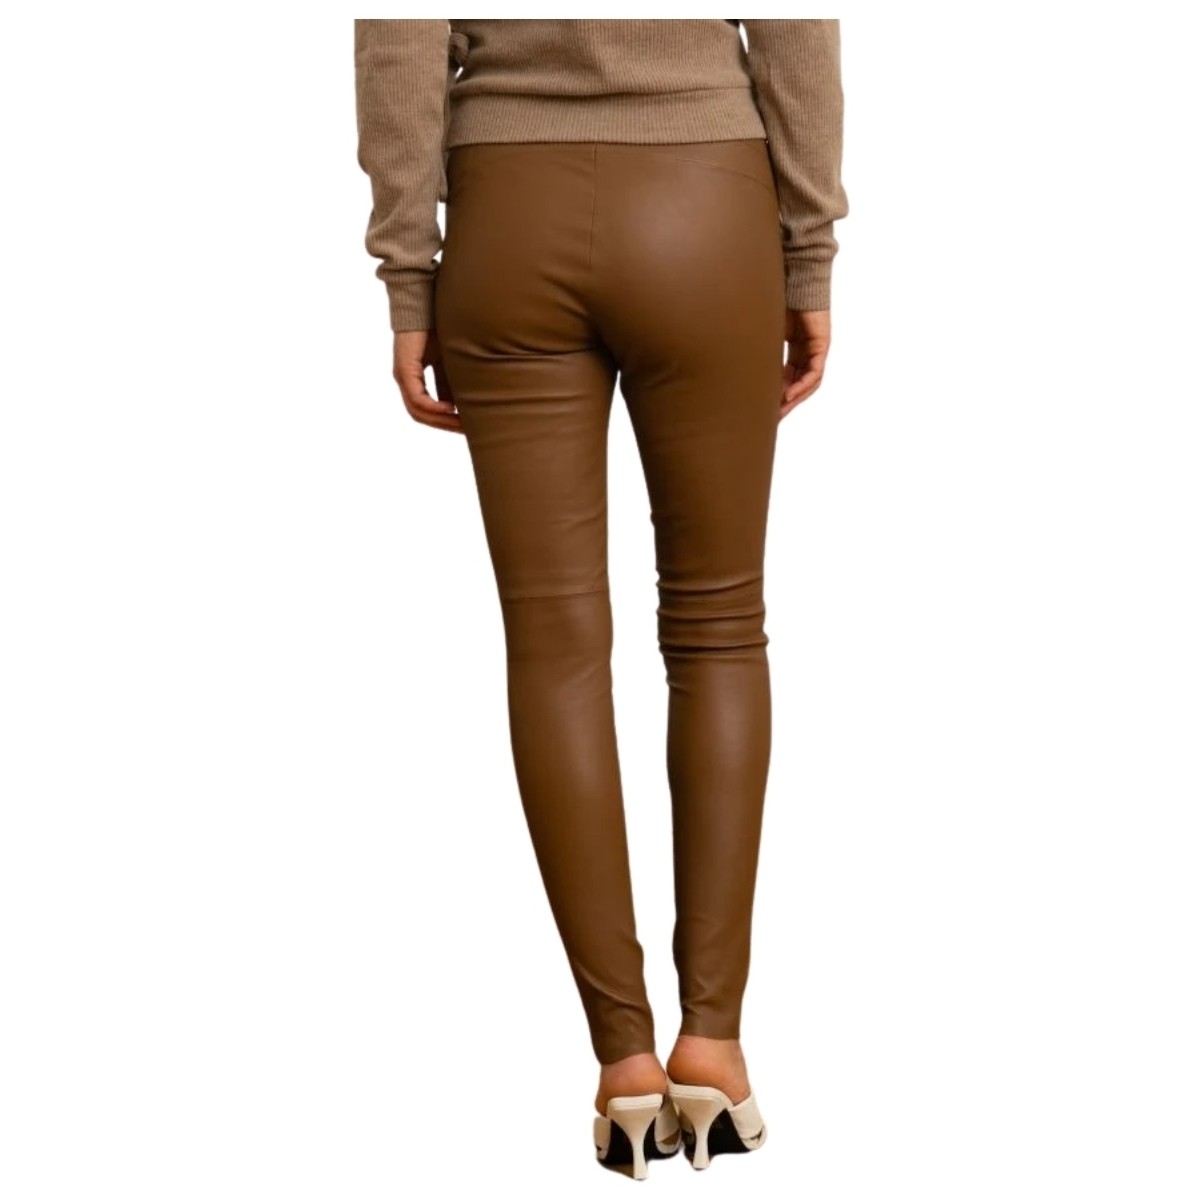 Oakwood Marron Pantalon legging en cuir femme Ref 57907 0510 Fauve txG8GuHy